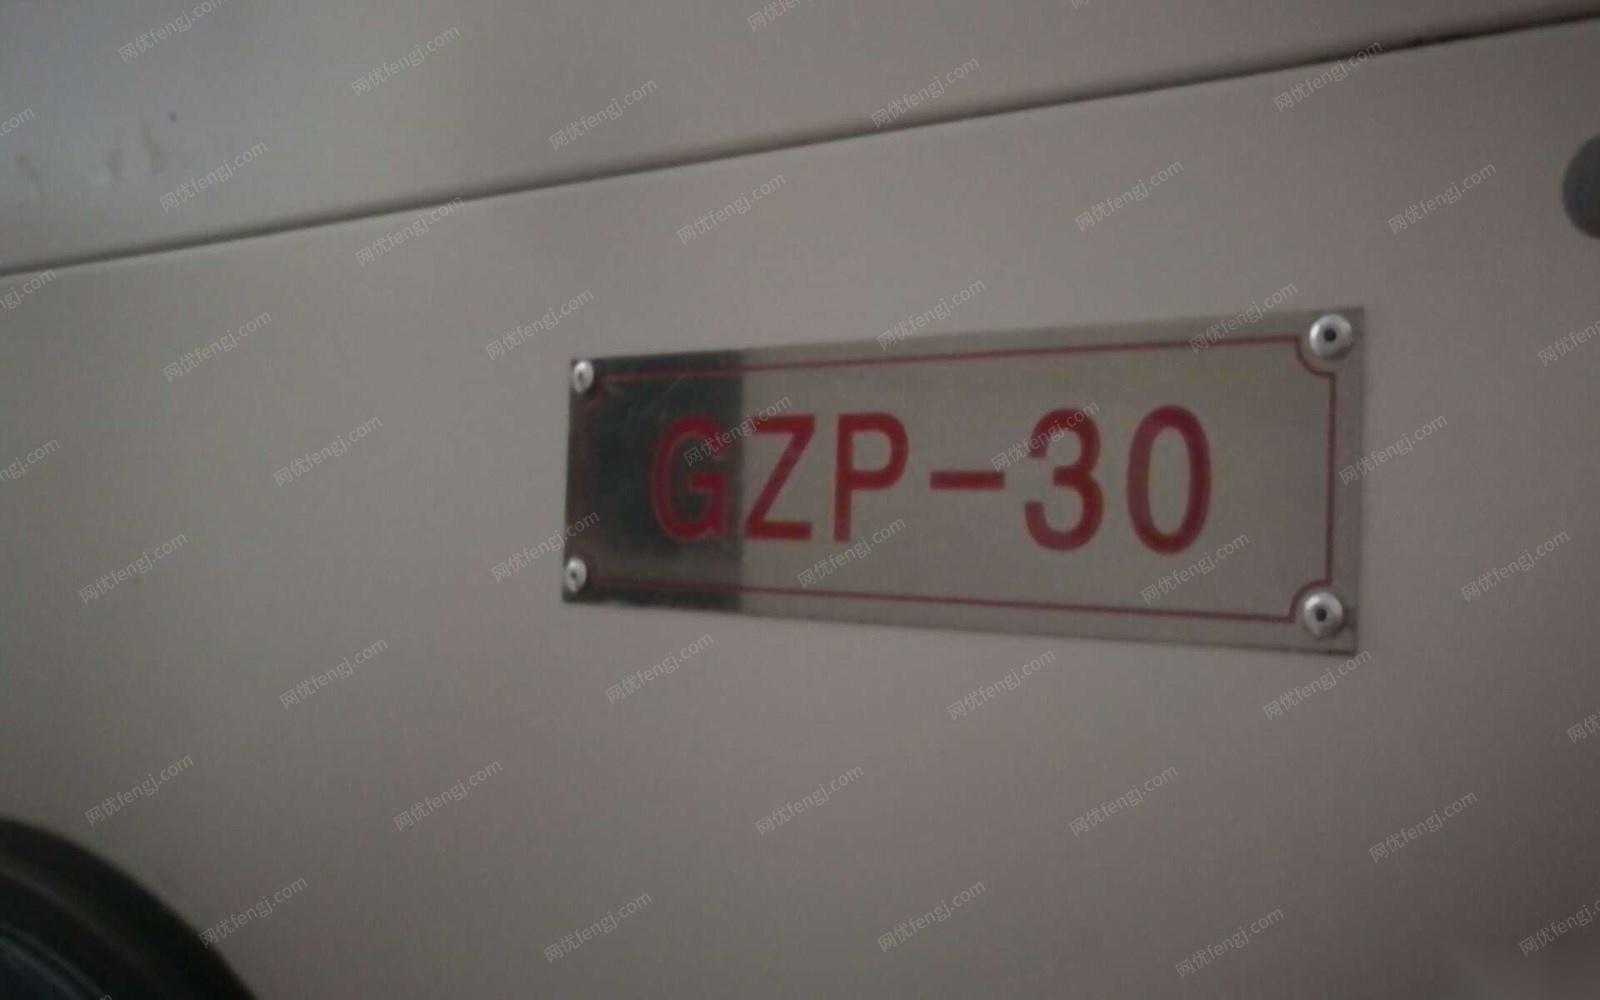 gzp-30烘干机低价出售